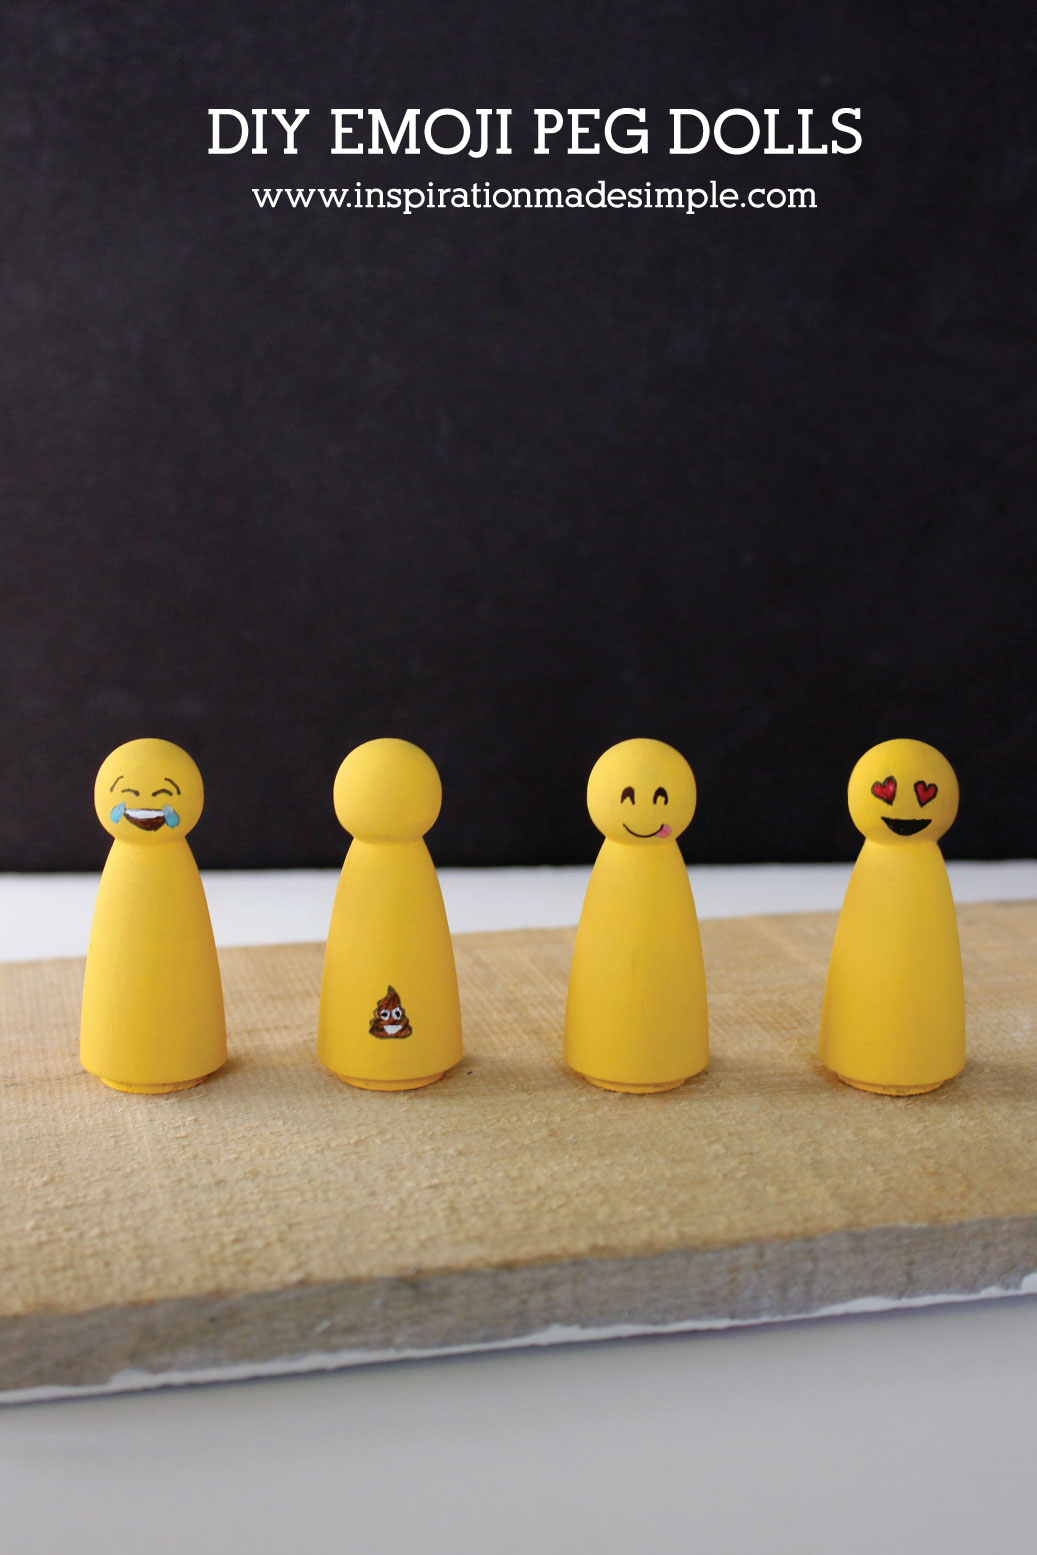 DIY Emoji Peg Dolls Tutorial